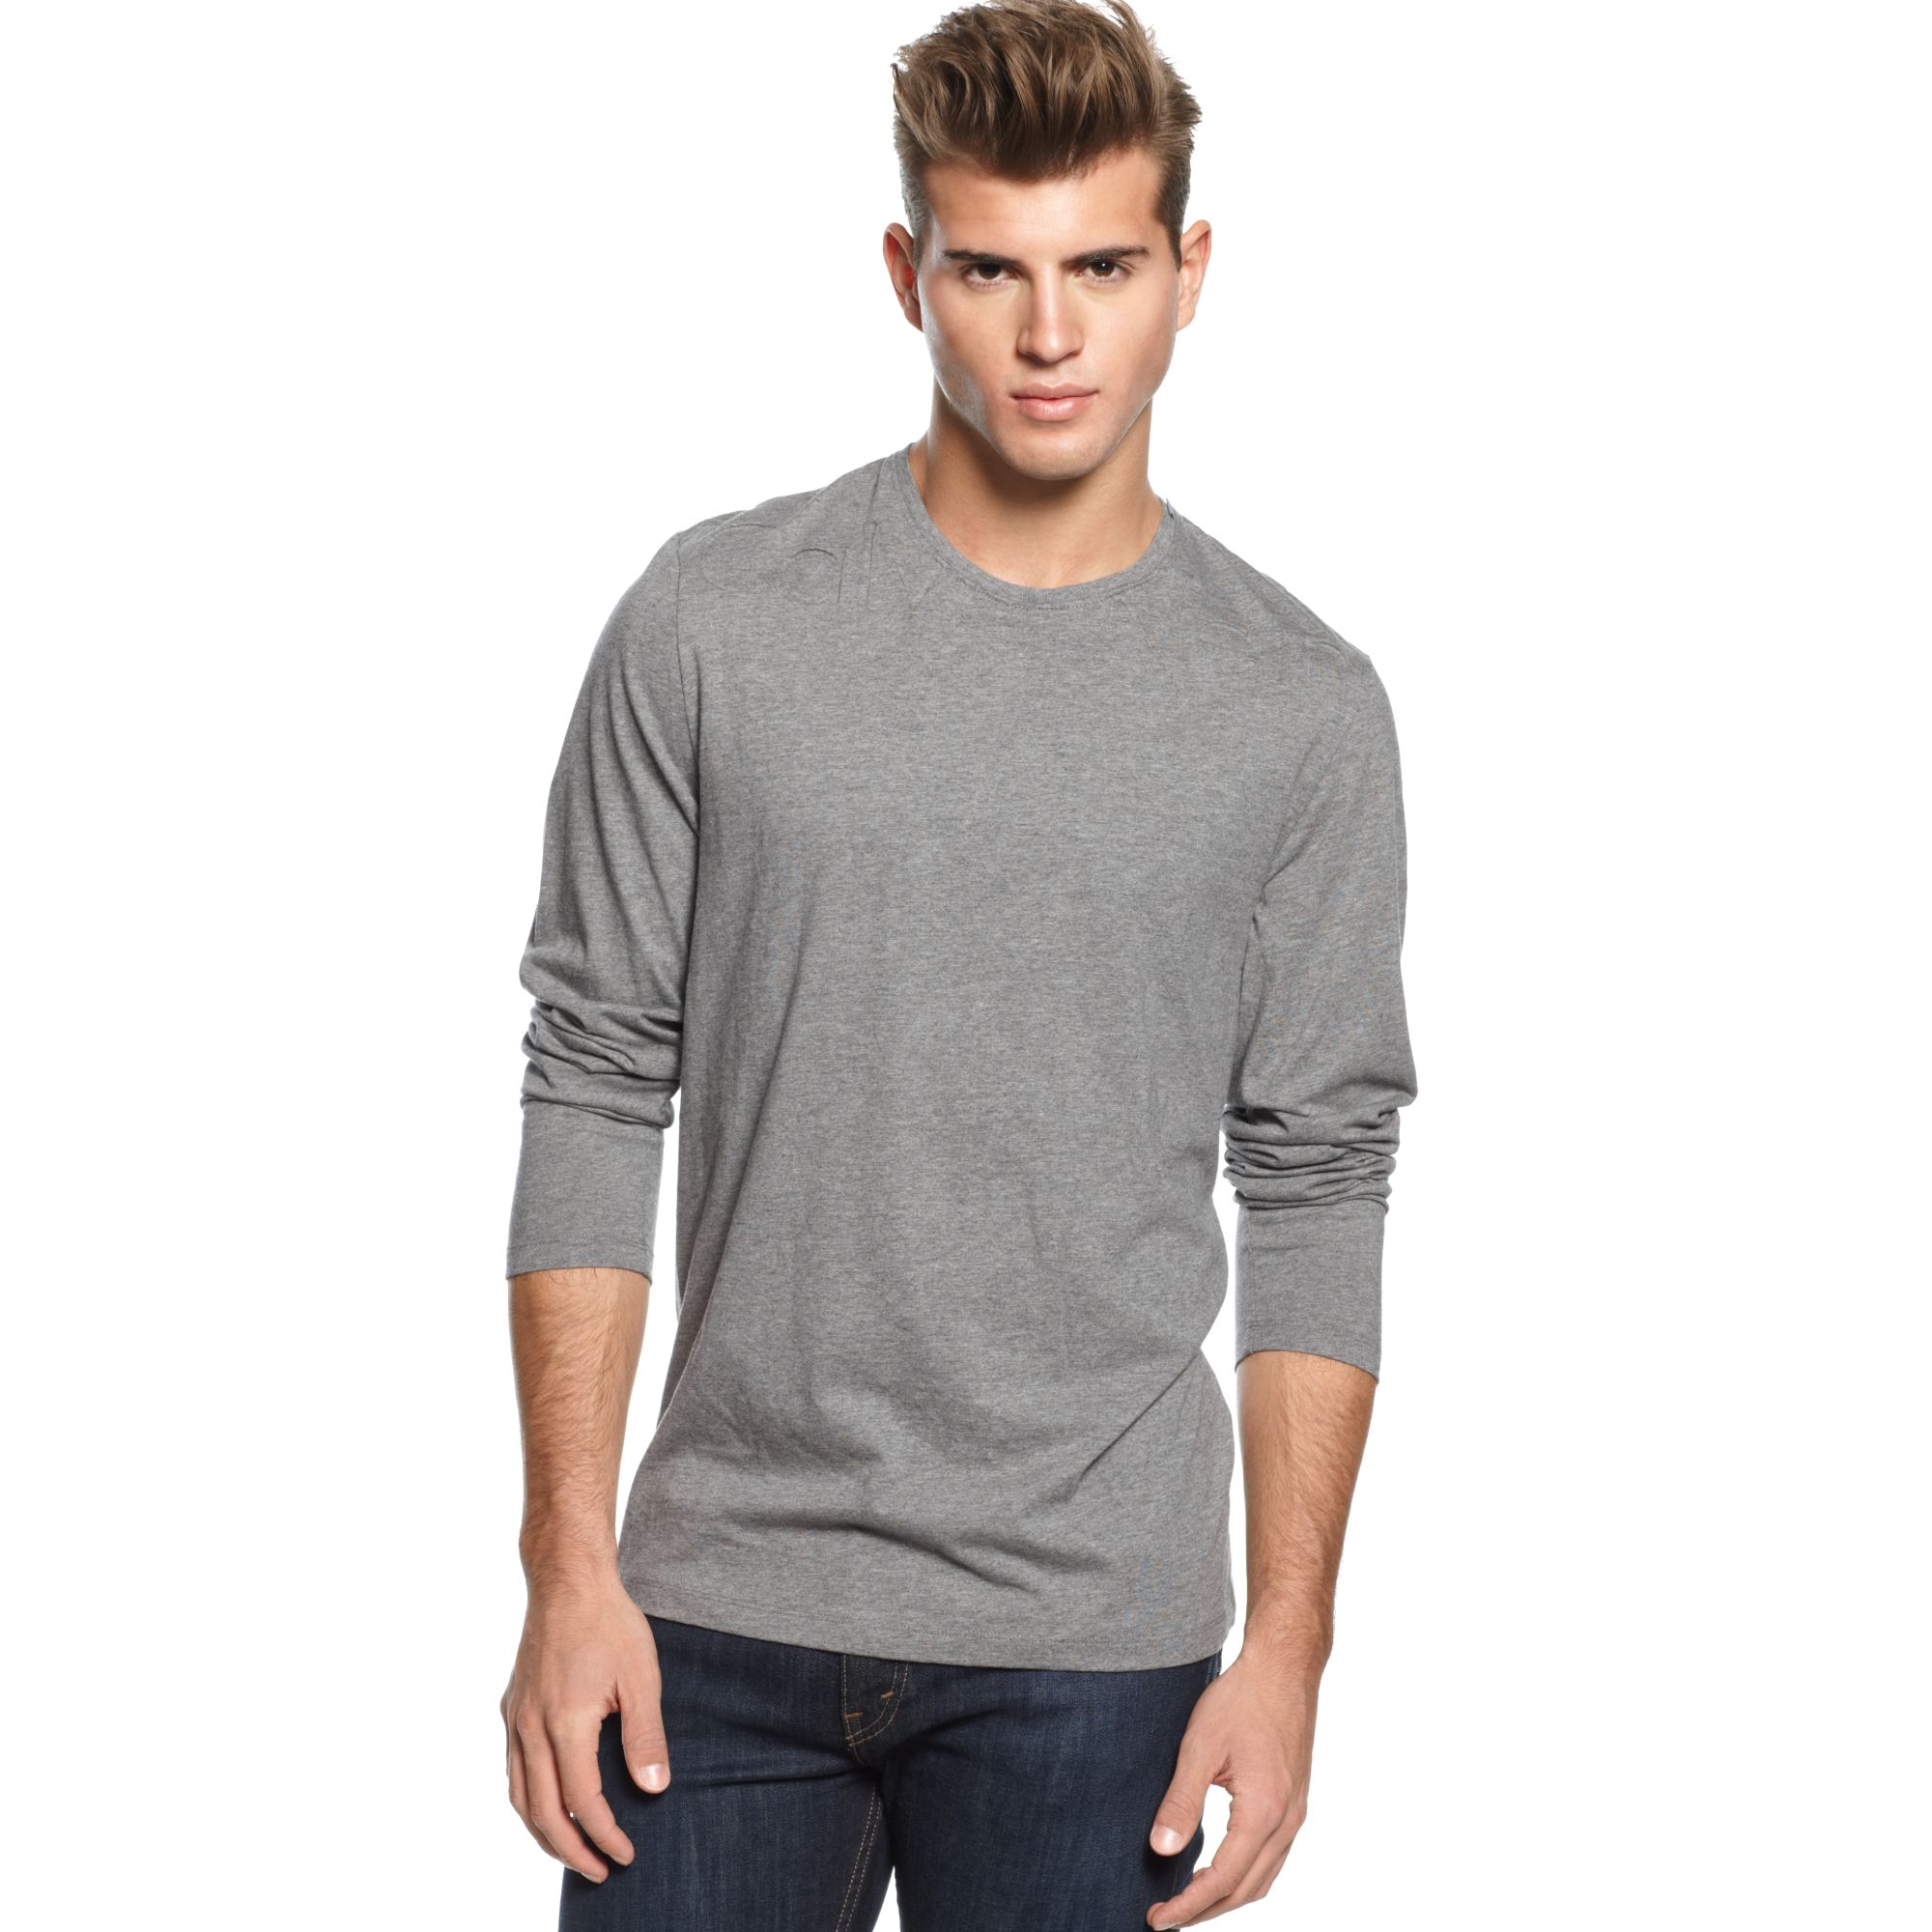 Lyst - Calvin klein Long Sleeve Crew Neck Graphic Shirt in Gray for Men